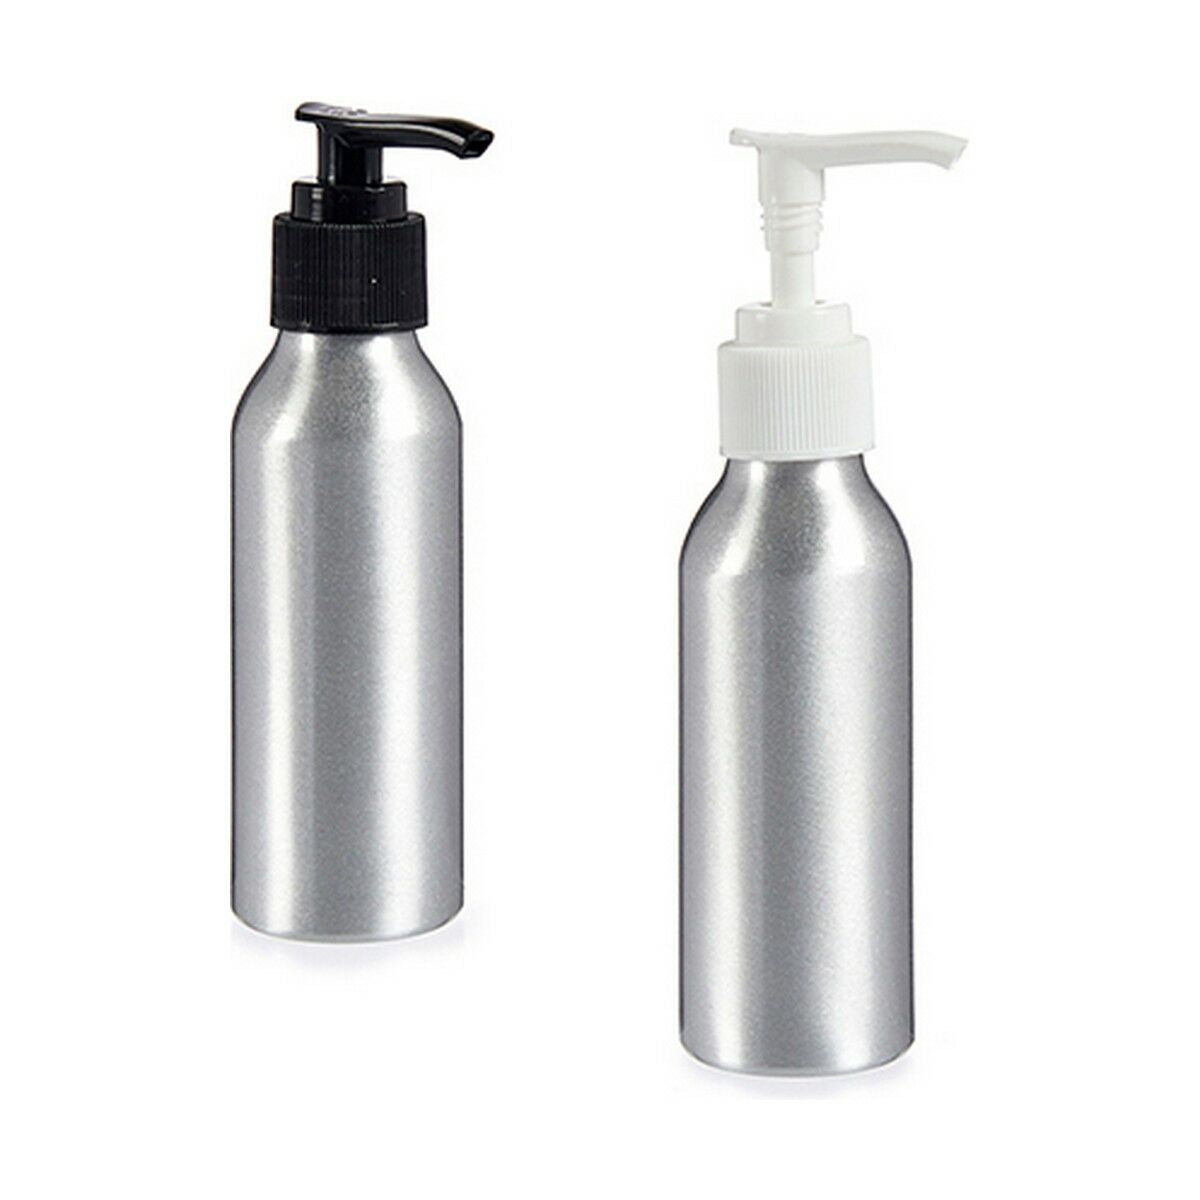 Soap Dispenser 100 ml Metal polypropylene (24 Units)